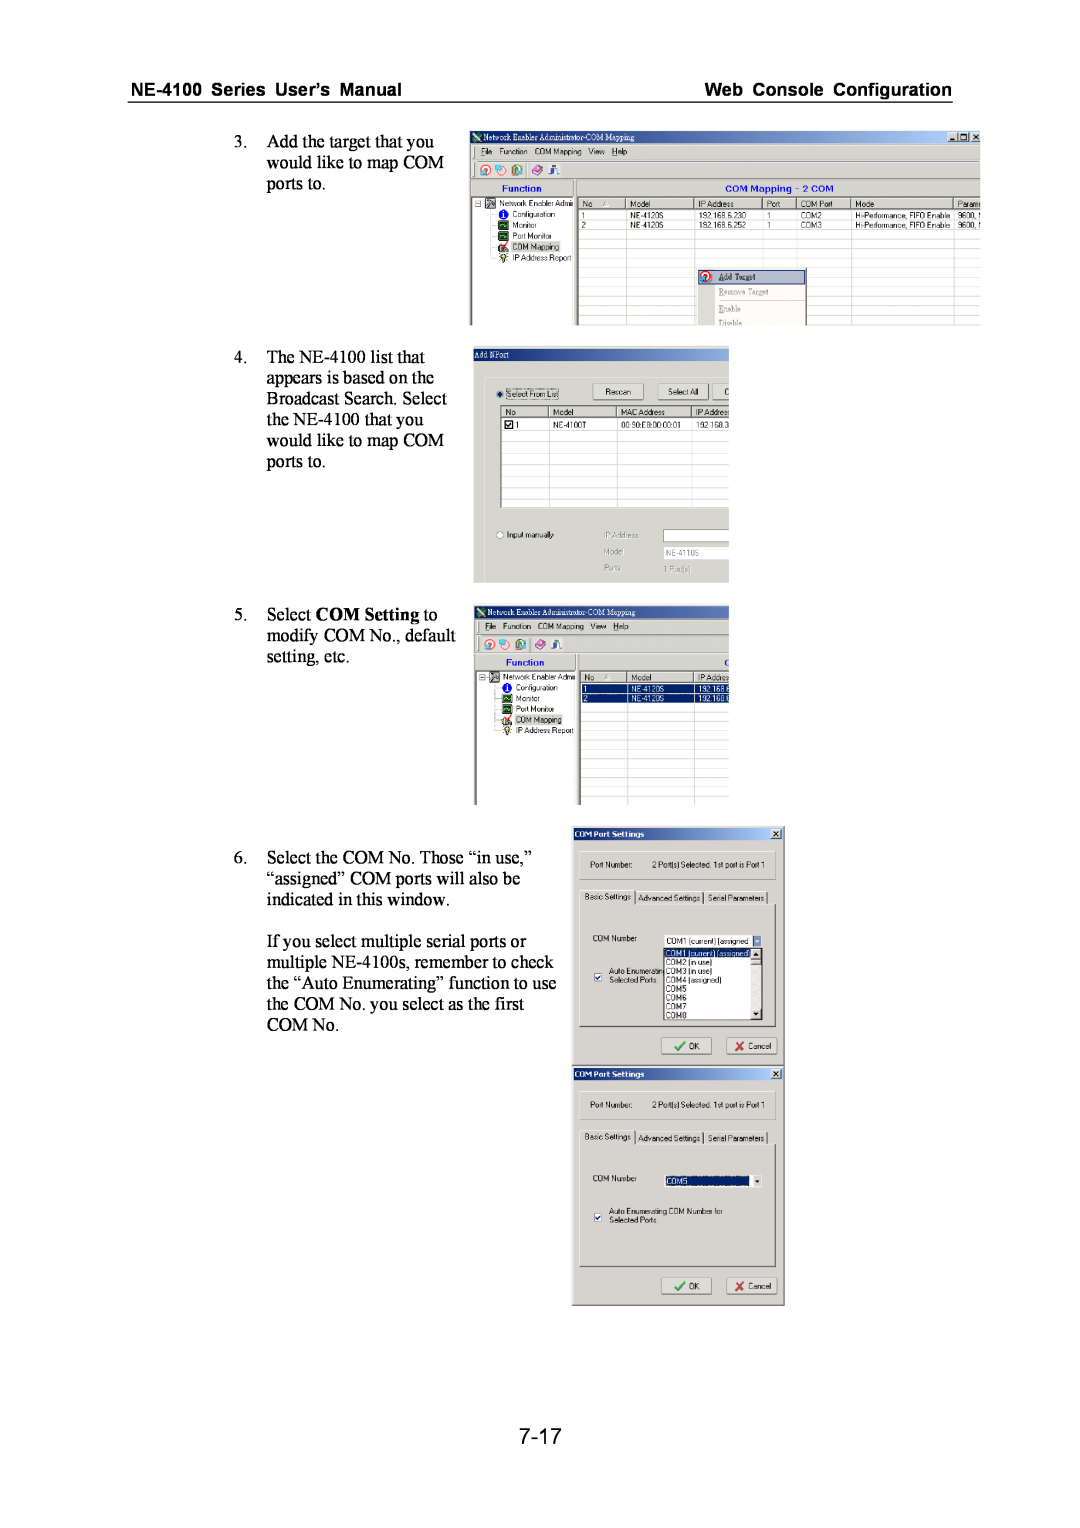 Moxa Technologies user manual 7-17, NE-4100 Series User’s Manual, Web Console Configuration 